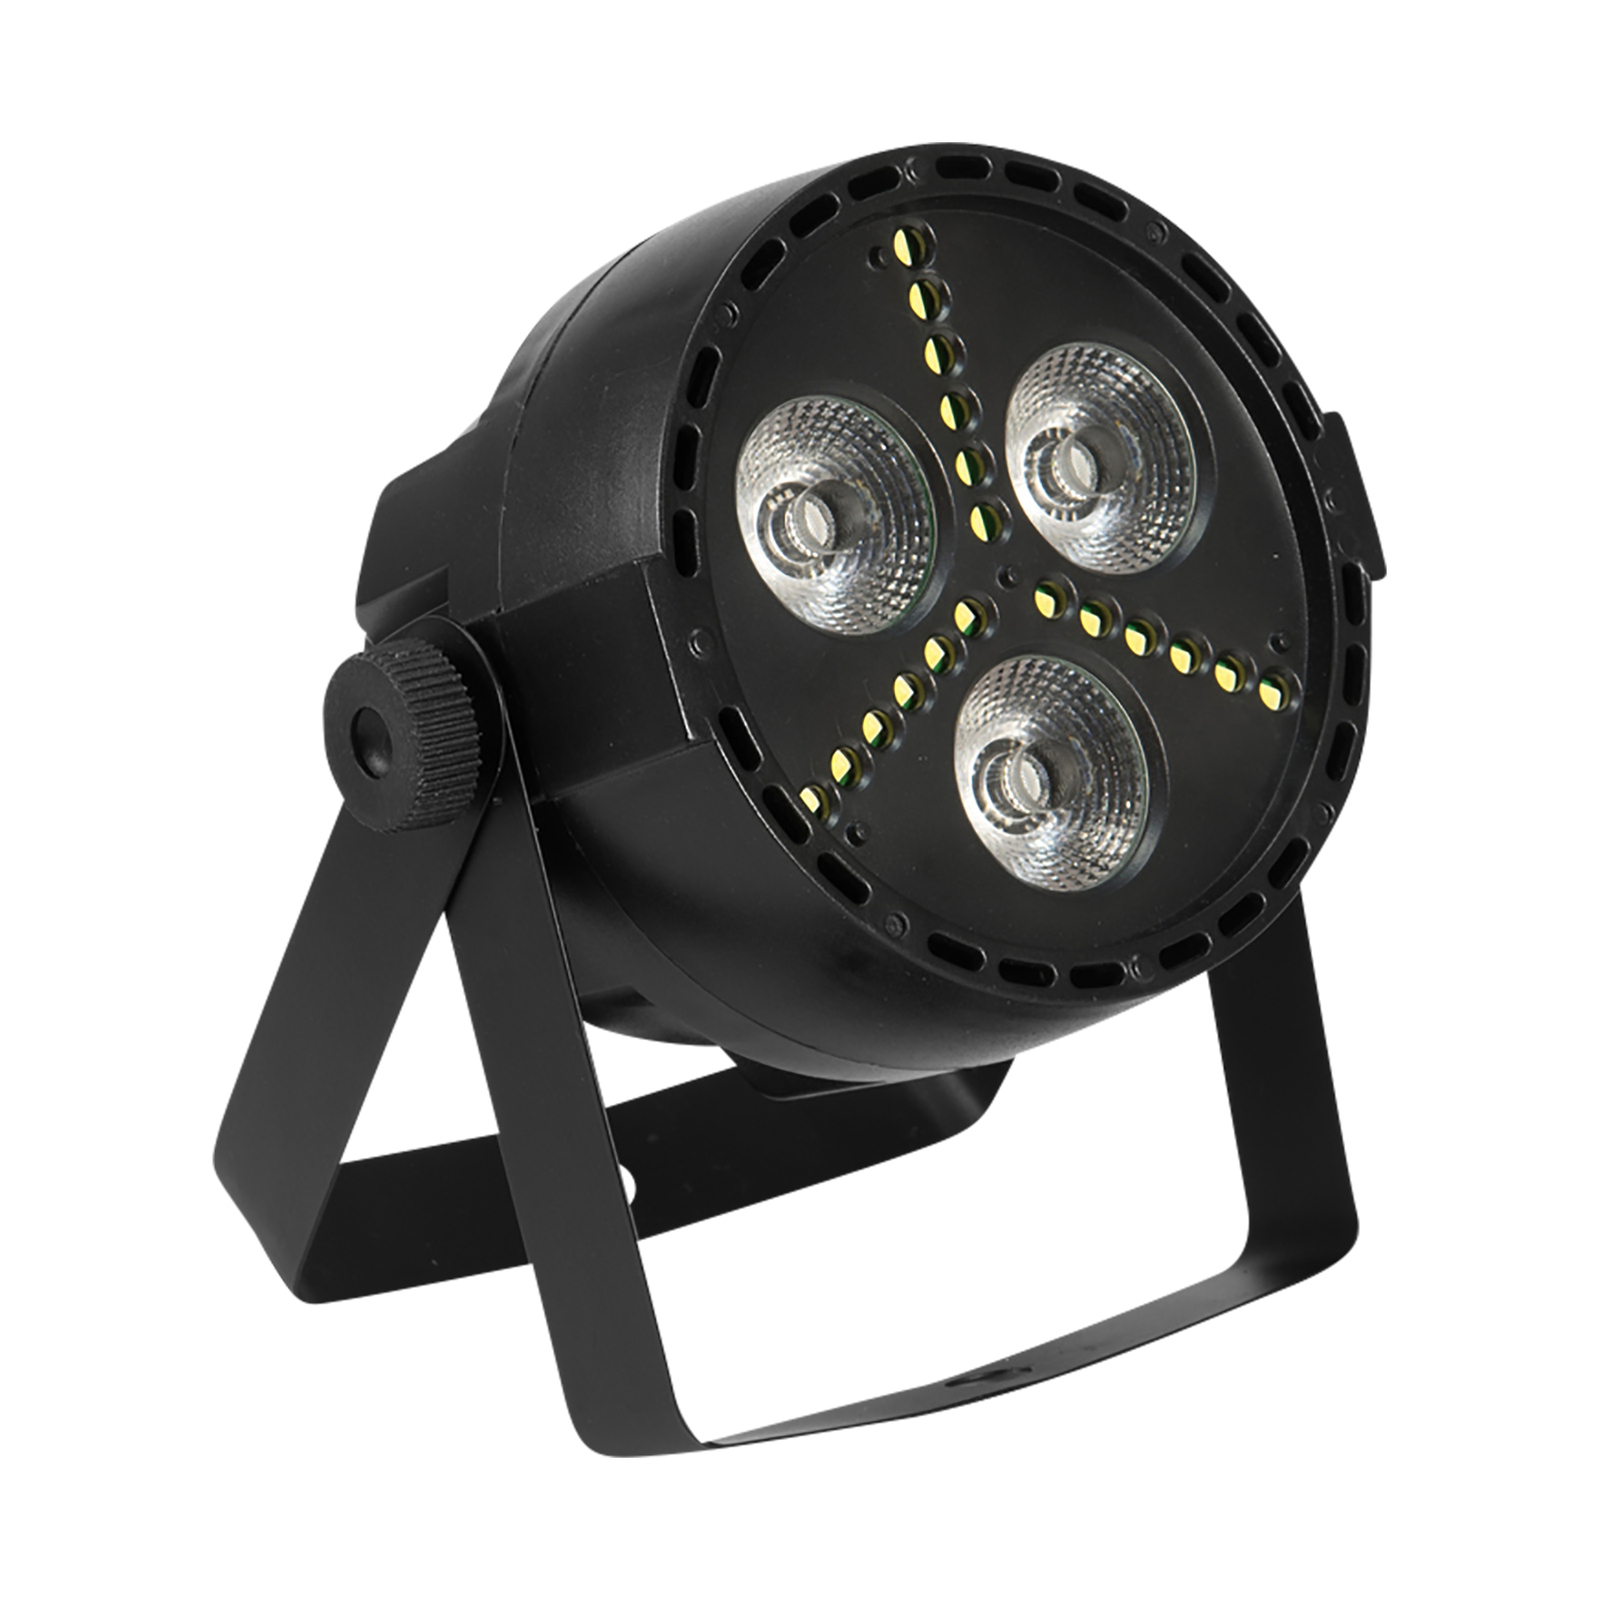 EUROLITE LED PARty Hybrid spot RGB stroboscope